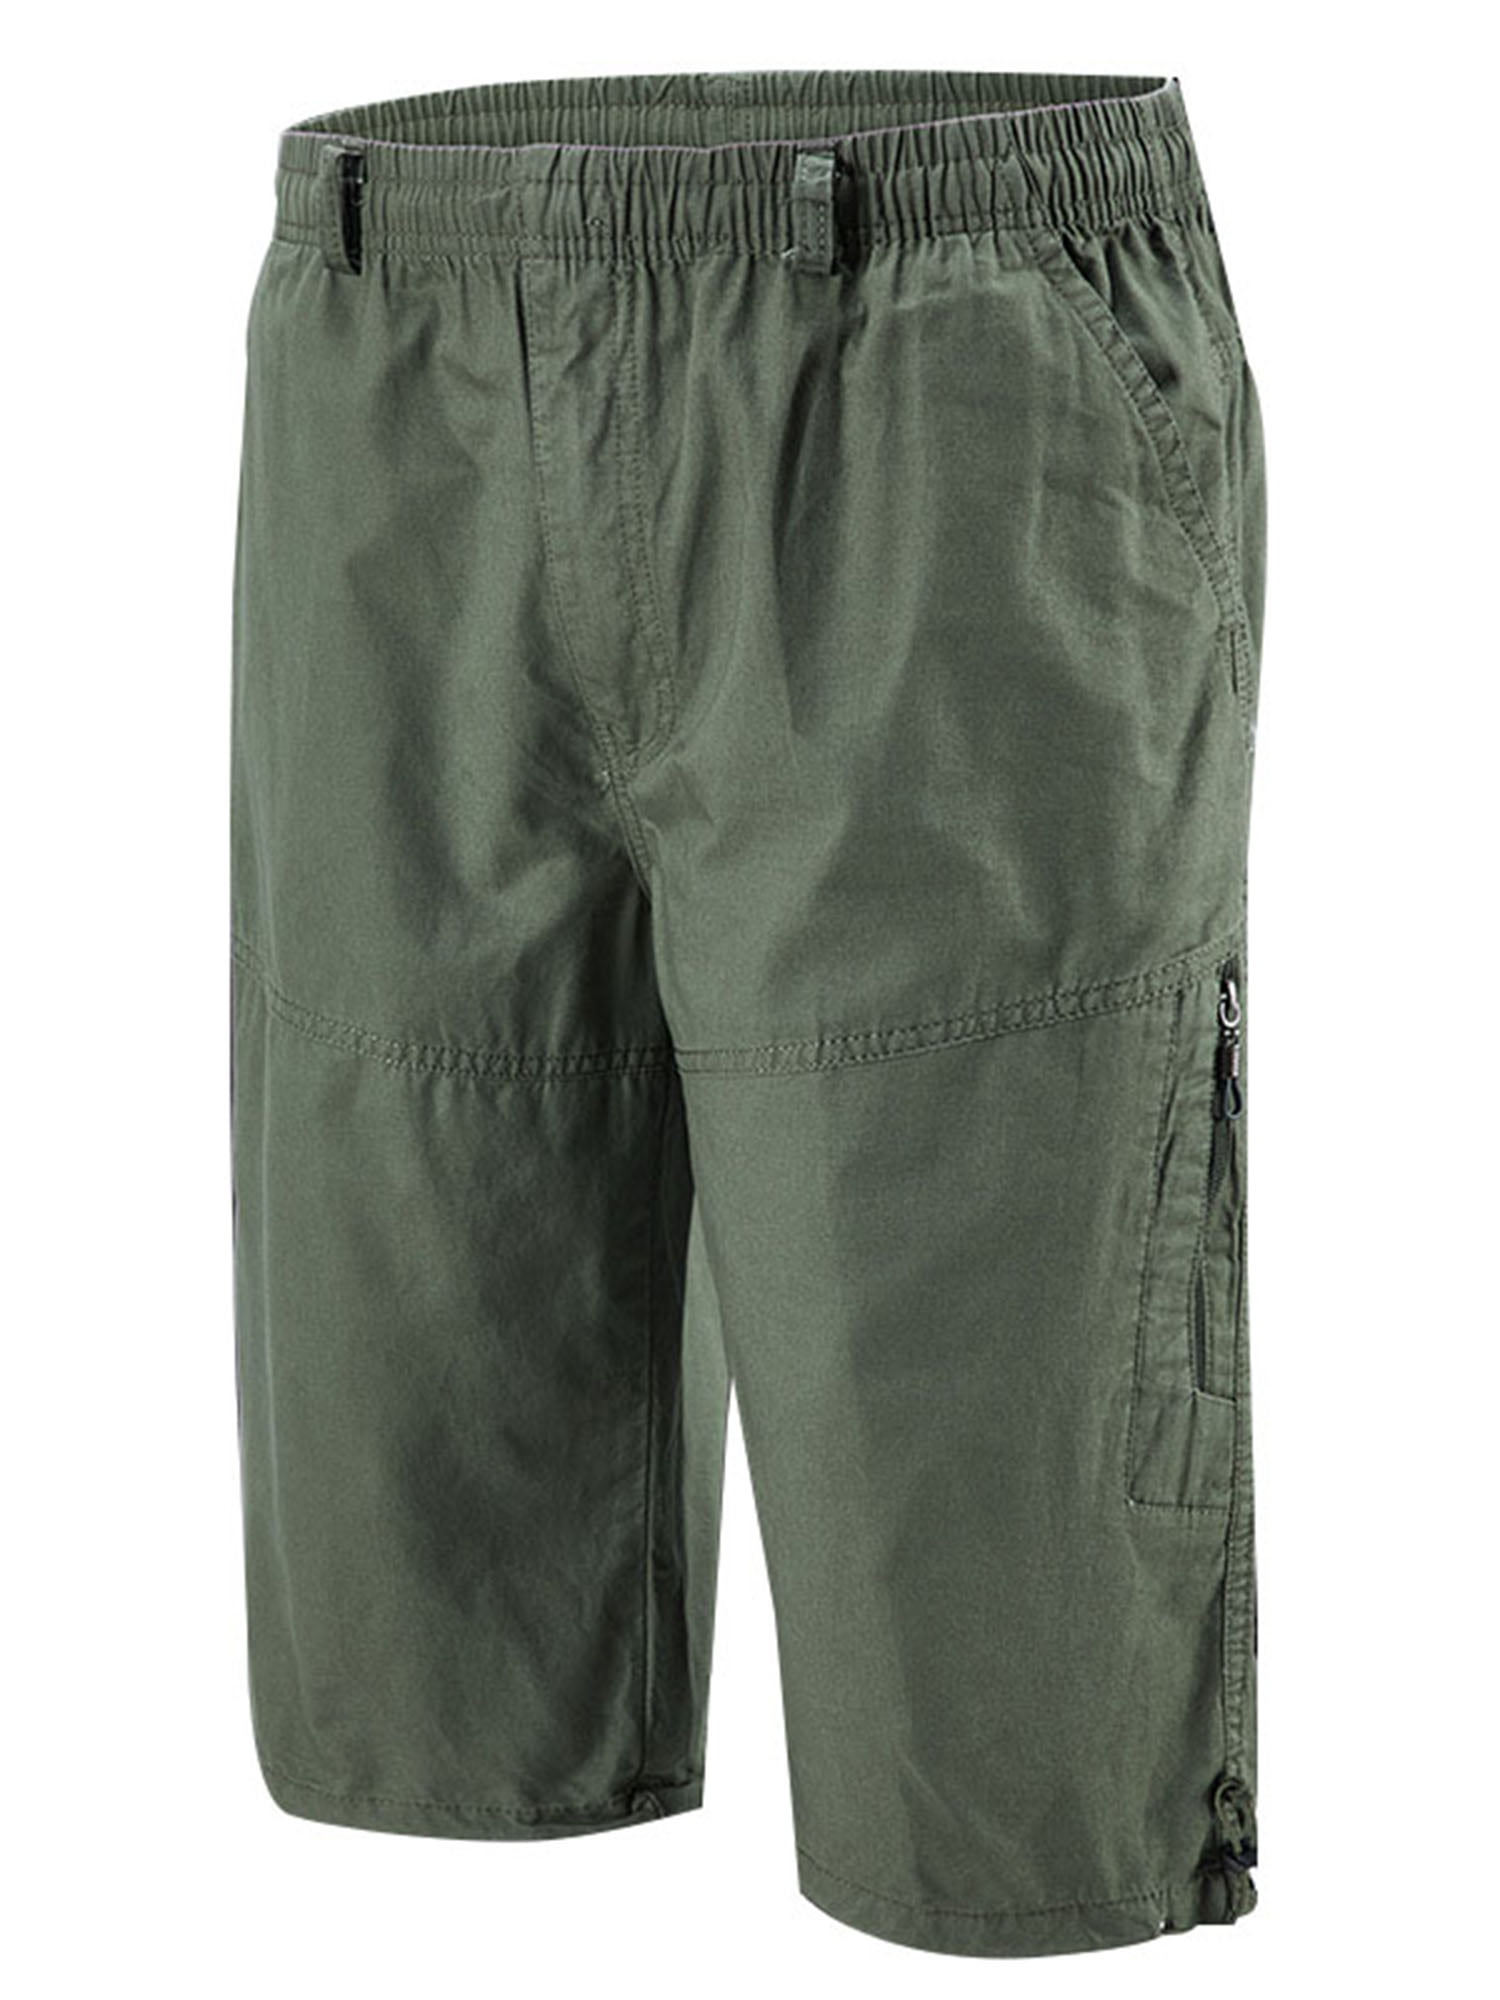 Big Boys Casual Shorts Summer Cotton Fit Drawstring Elastic Waist Beach Shorts with Zipper Pockets